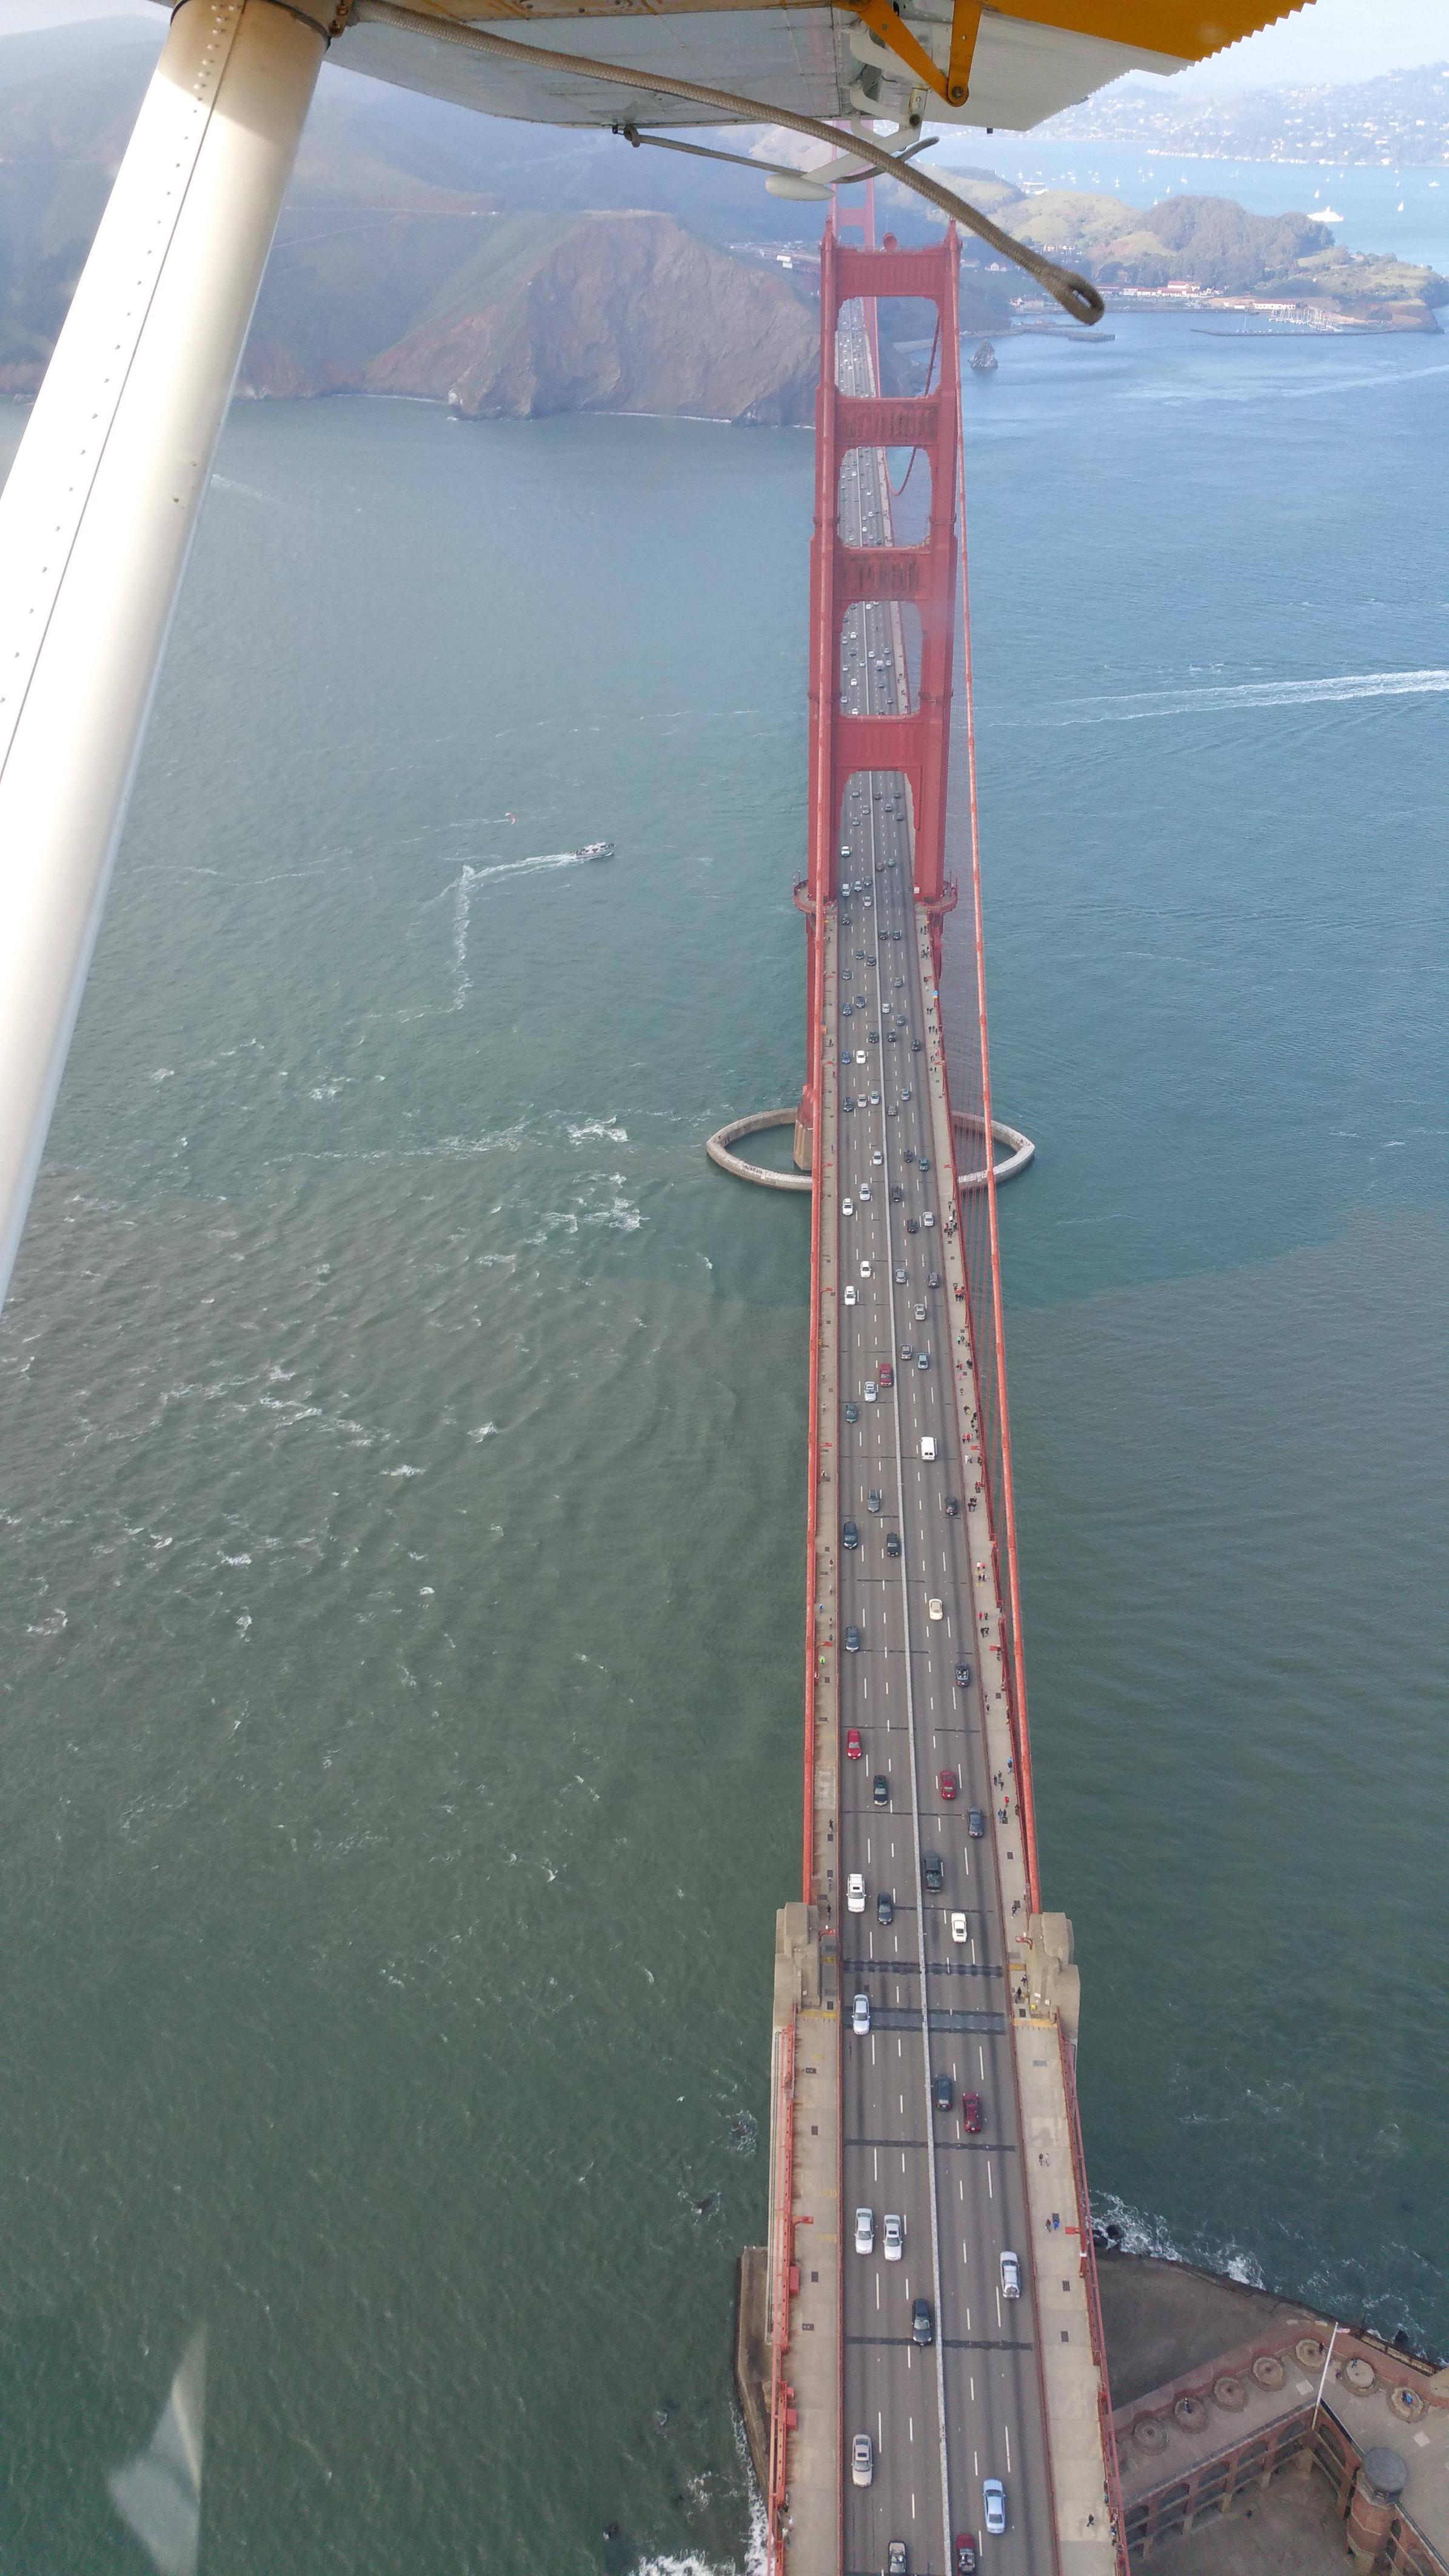 Took my girlfriend for an hour flight over Golden Gate Bridge for her birthday